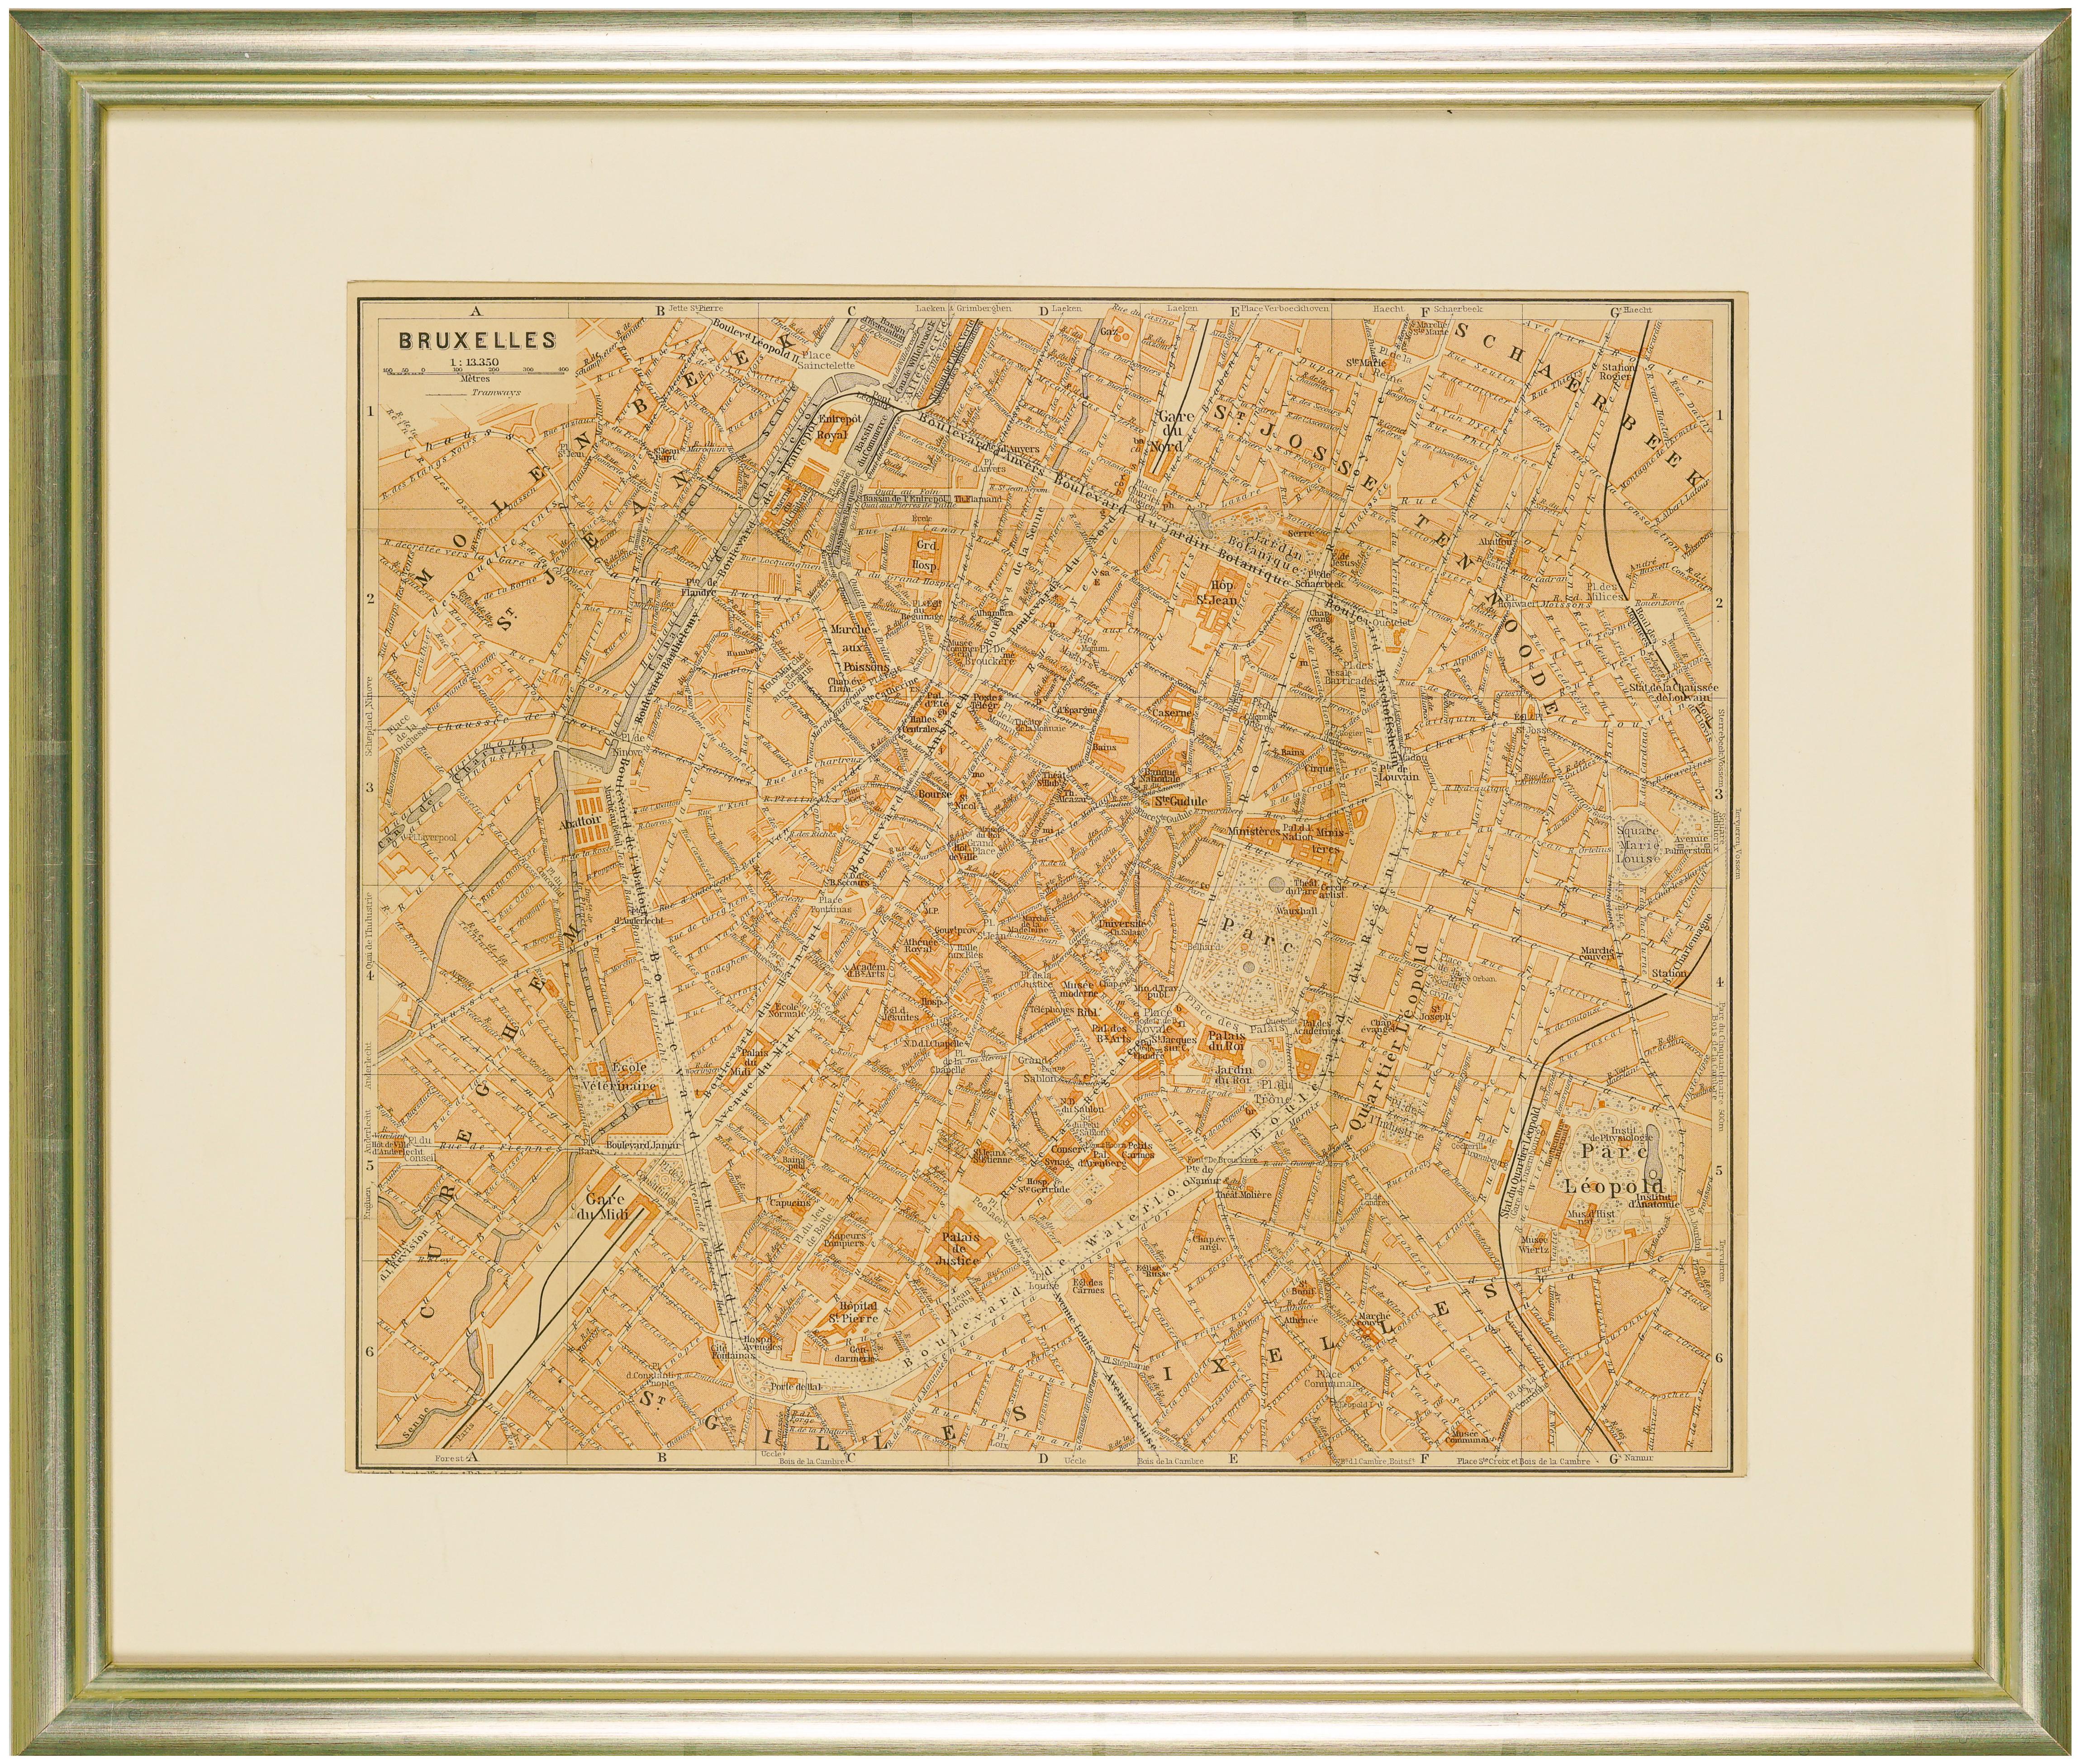 Unknown Landscape Print - 1931 Map of Bruxelles (Brussels), Belgium